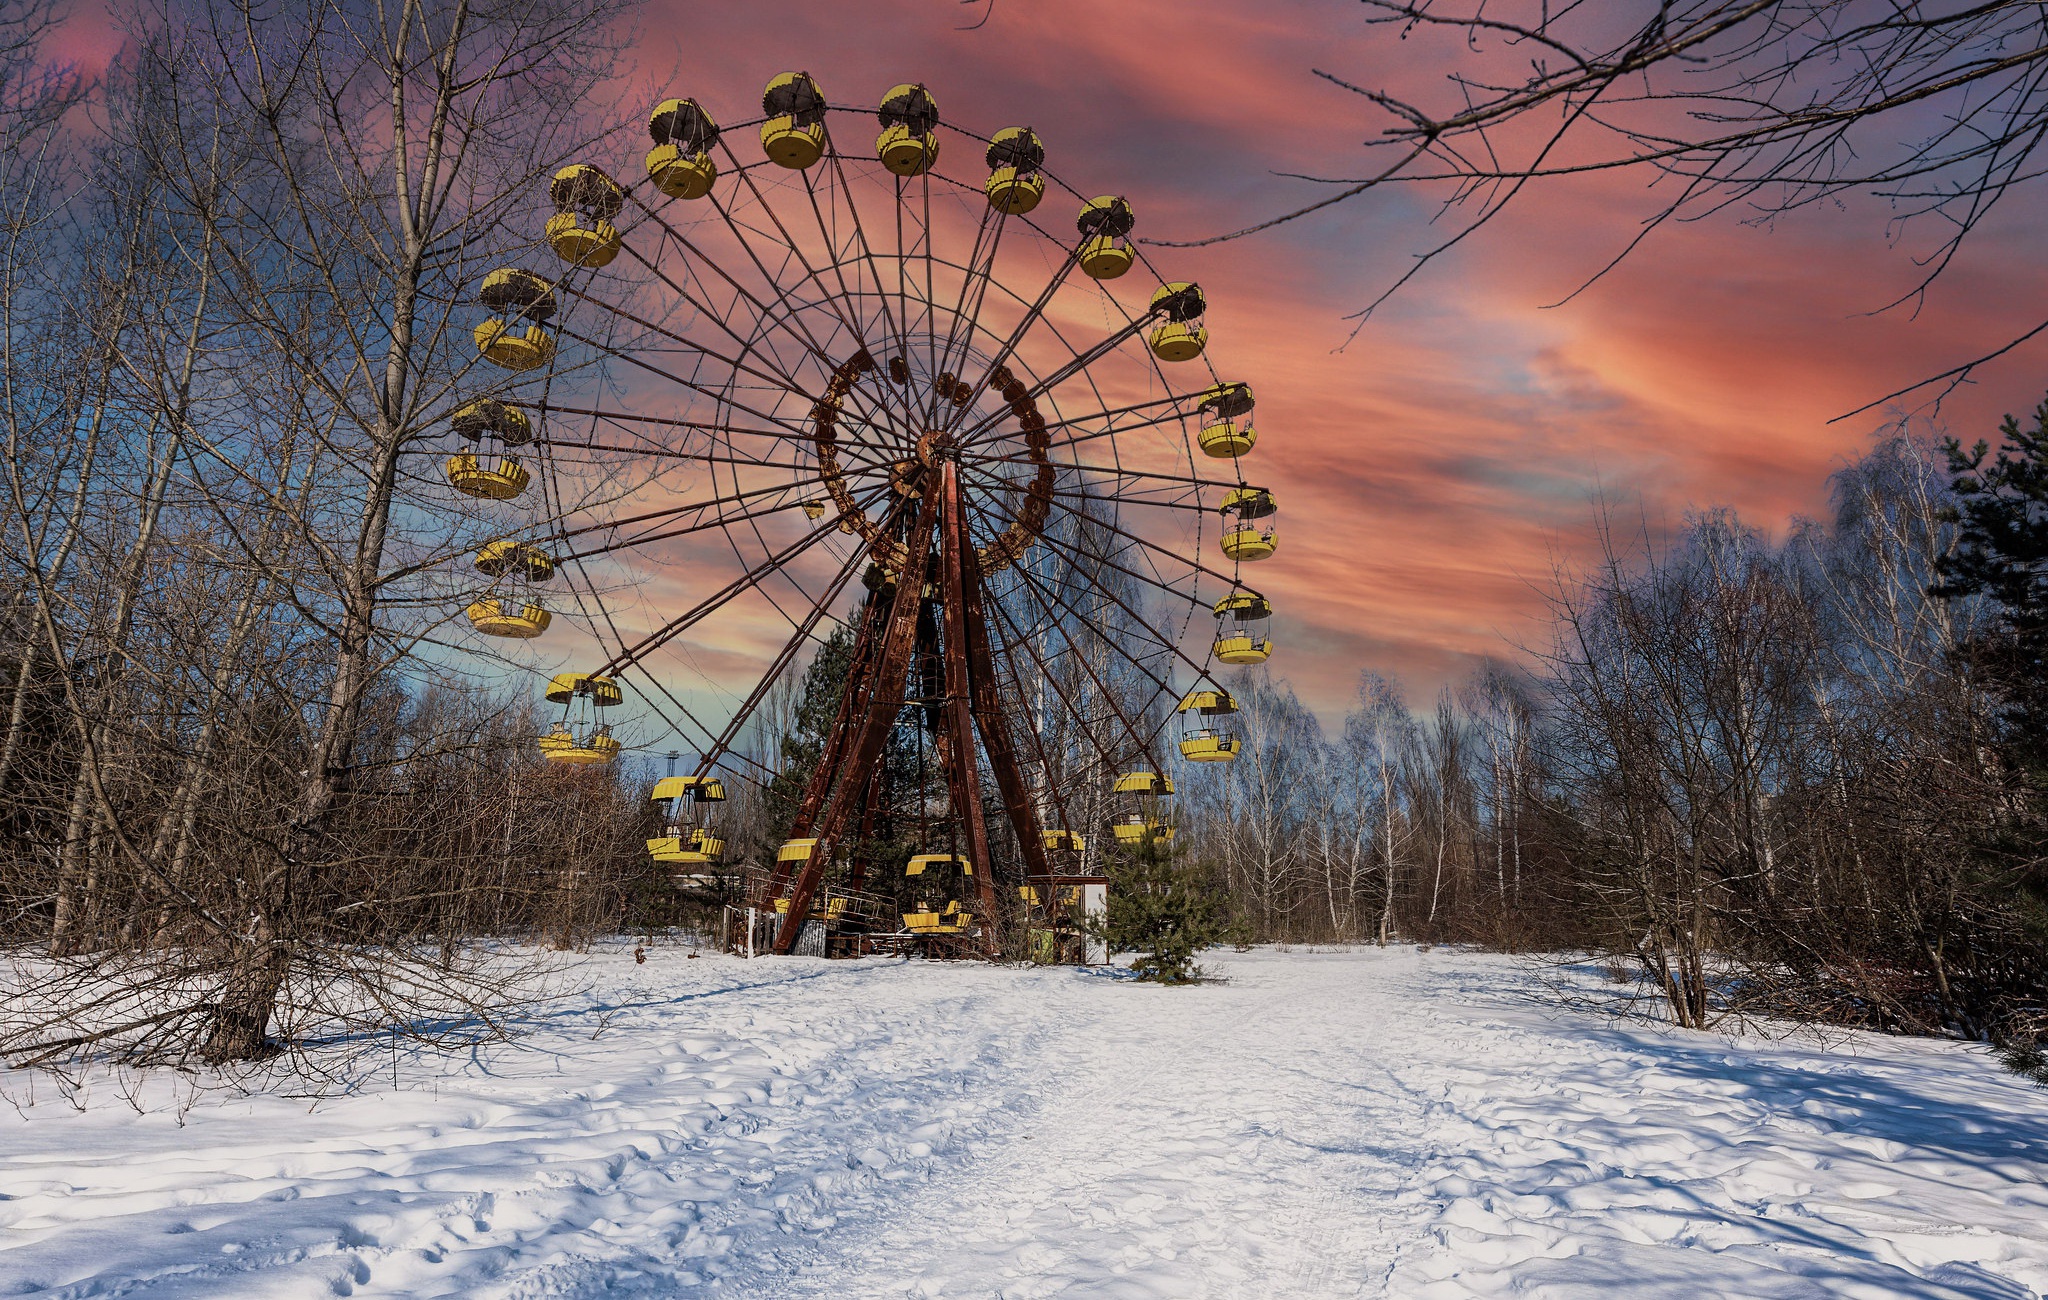 man made, ferris wheel, abandoned, chernobyl, snow, sunset, winter